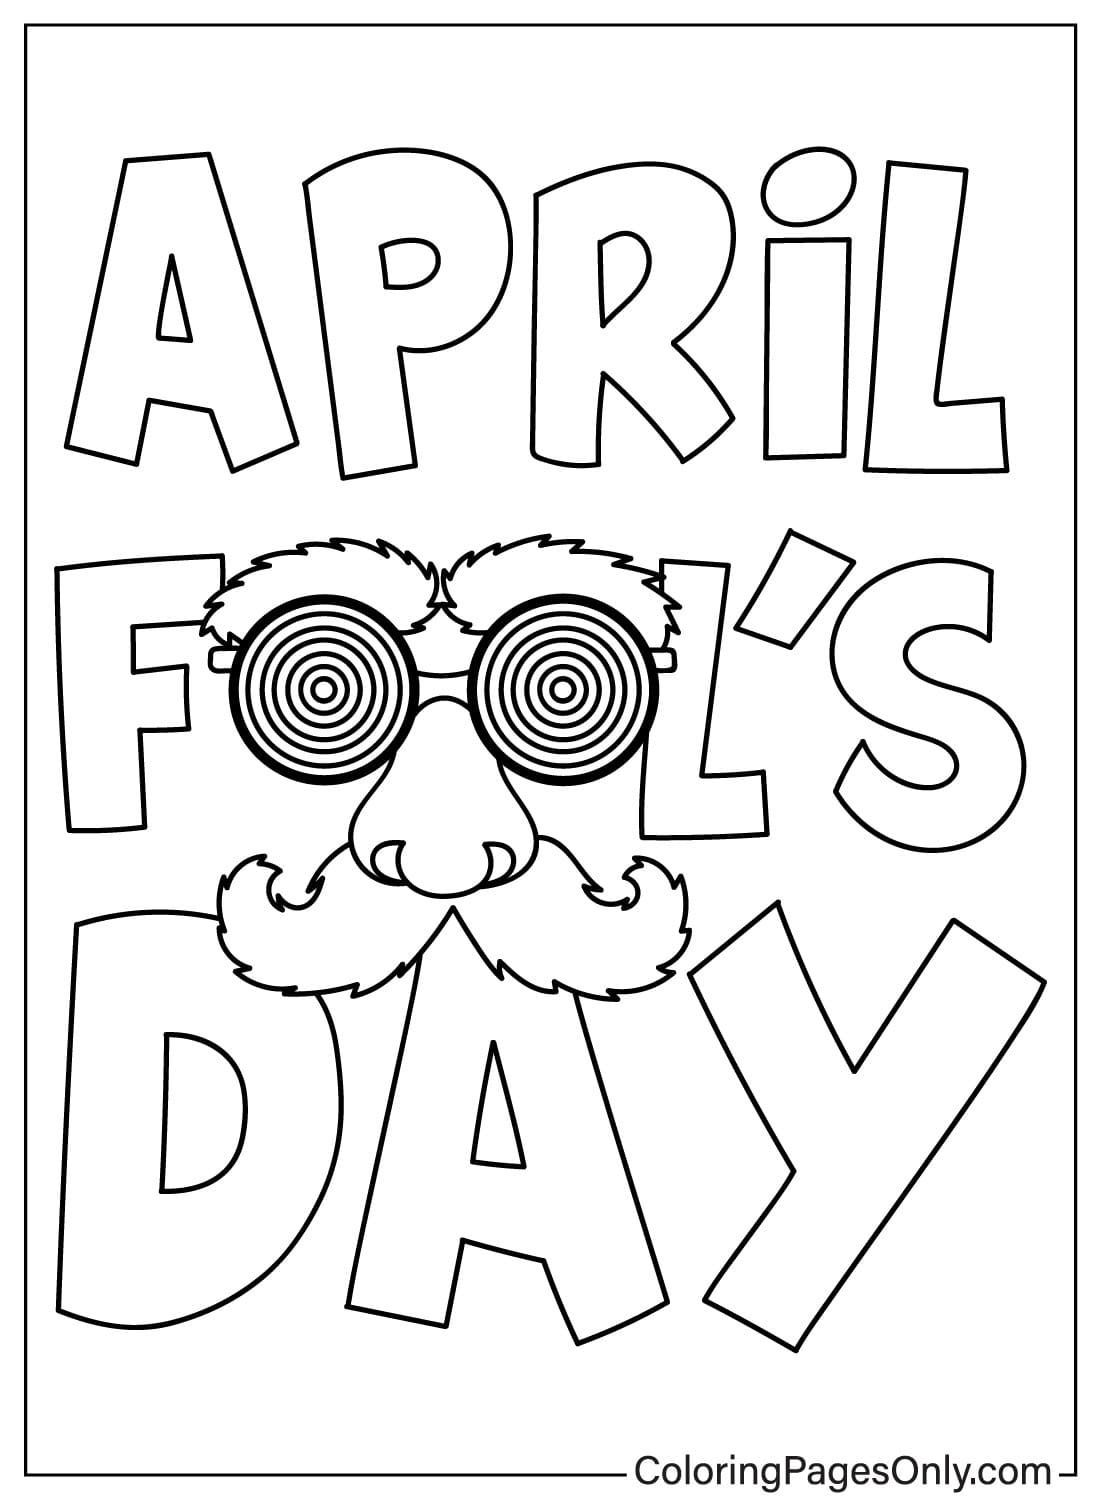 April Fool's Day typografie kleurplaat van April Fool's Day